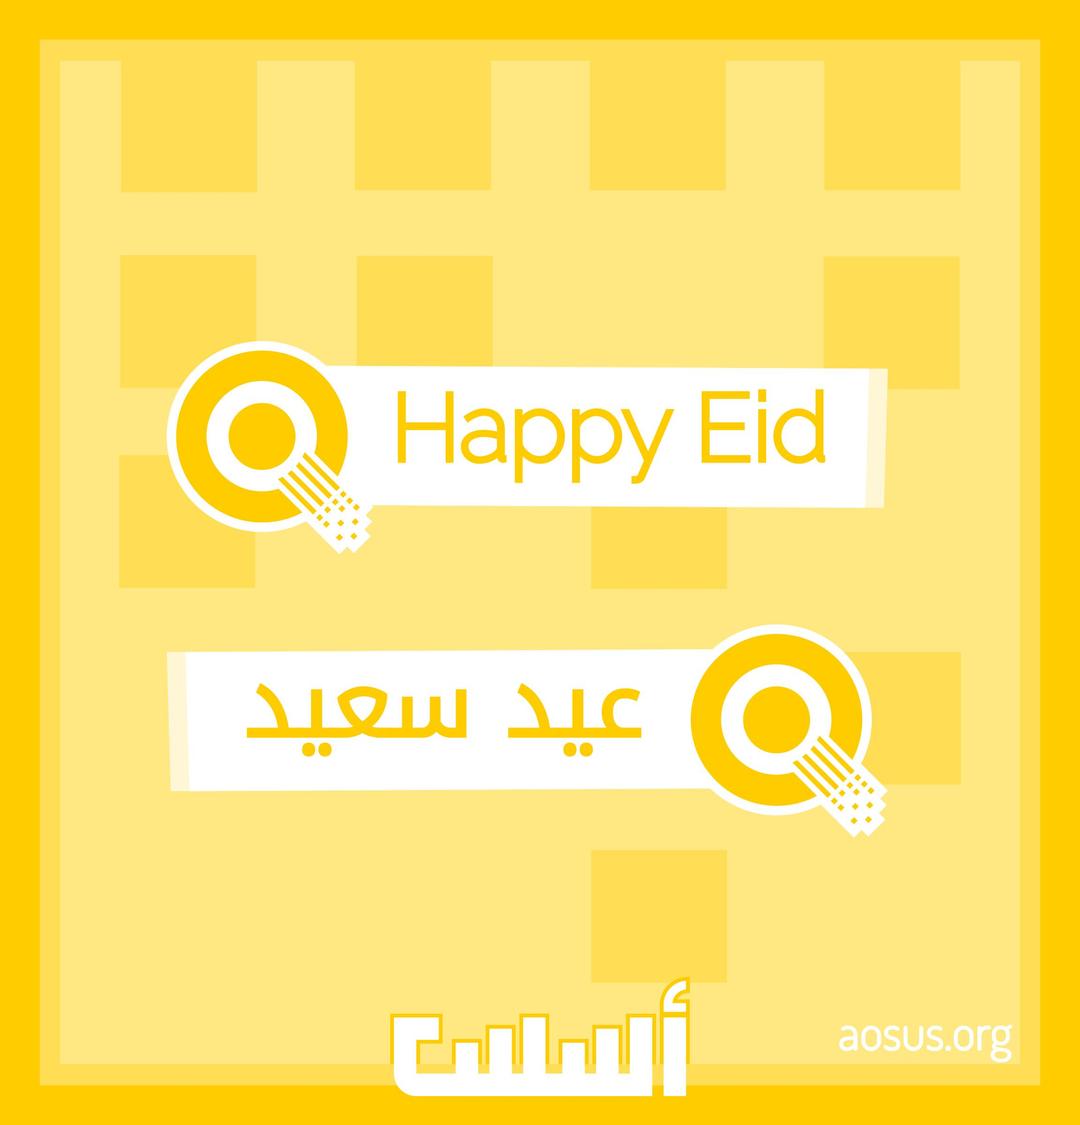 aosus.org happy eid clipart png transparent